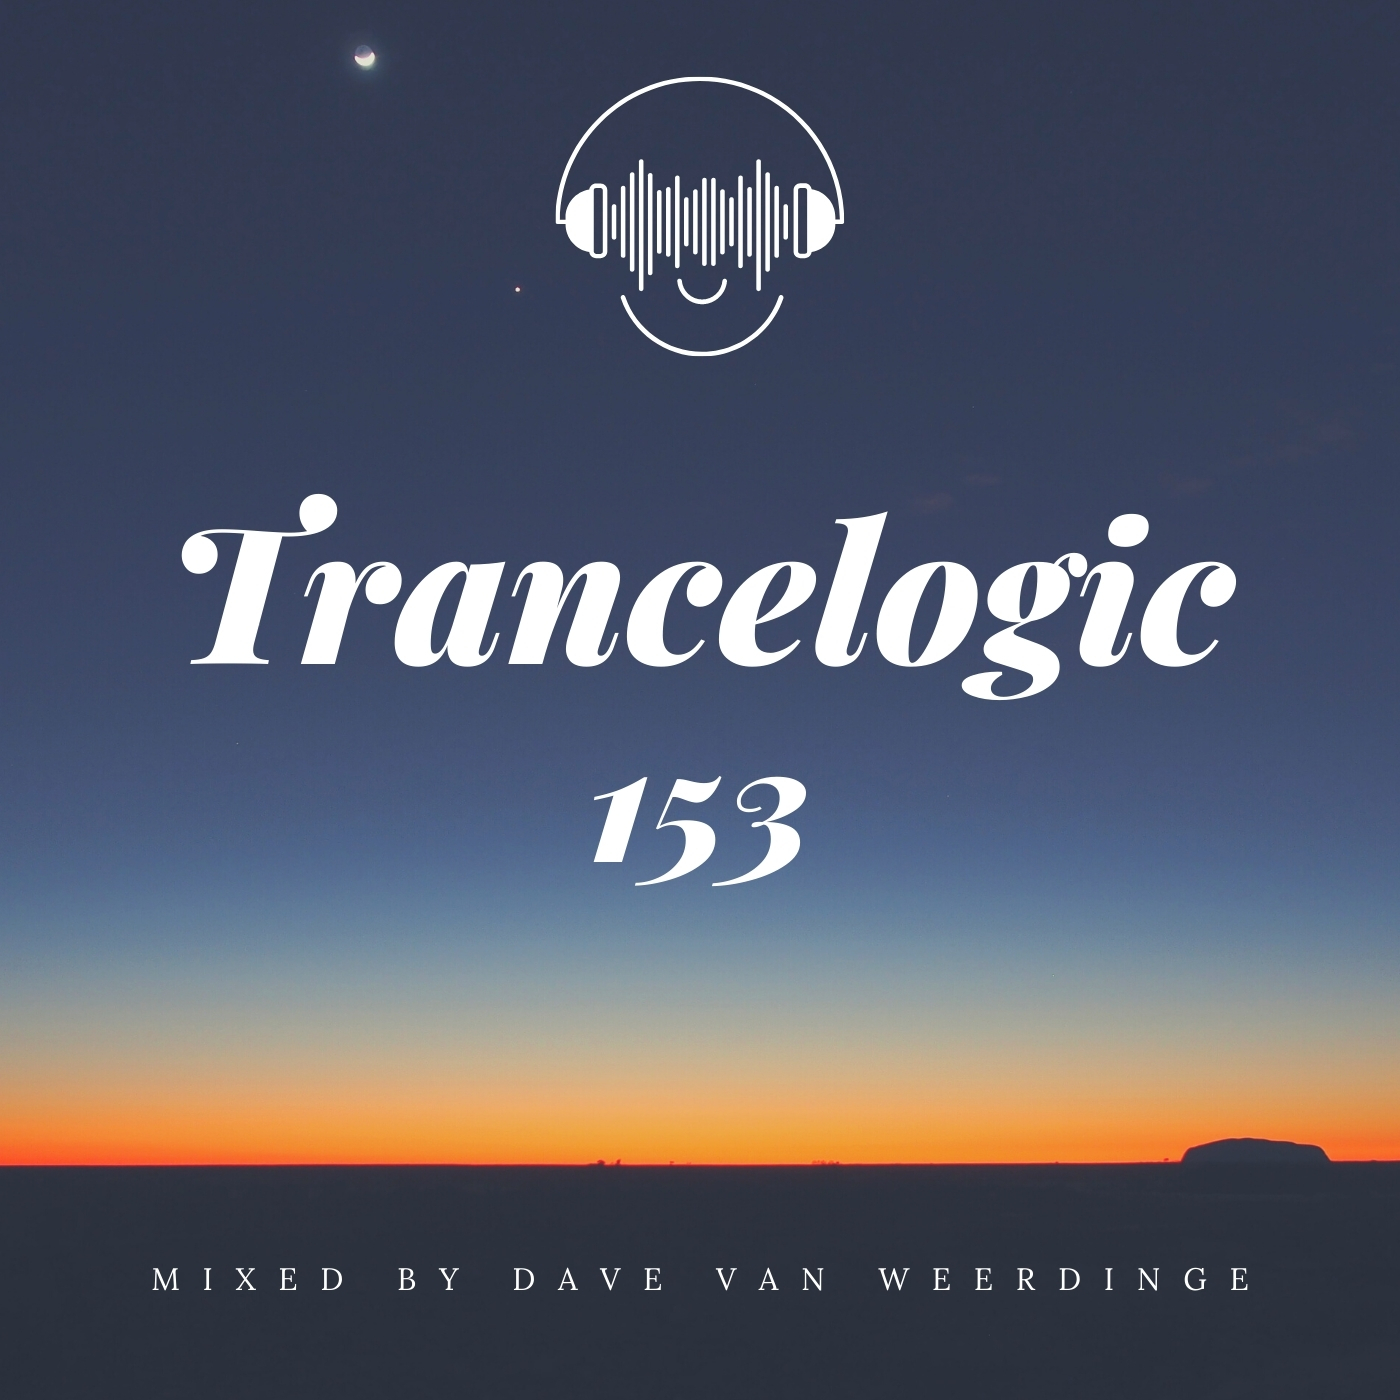 Trancelogic 153 by Dave van Weerdinge